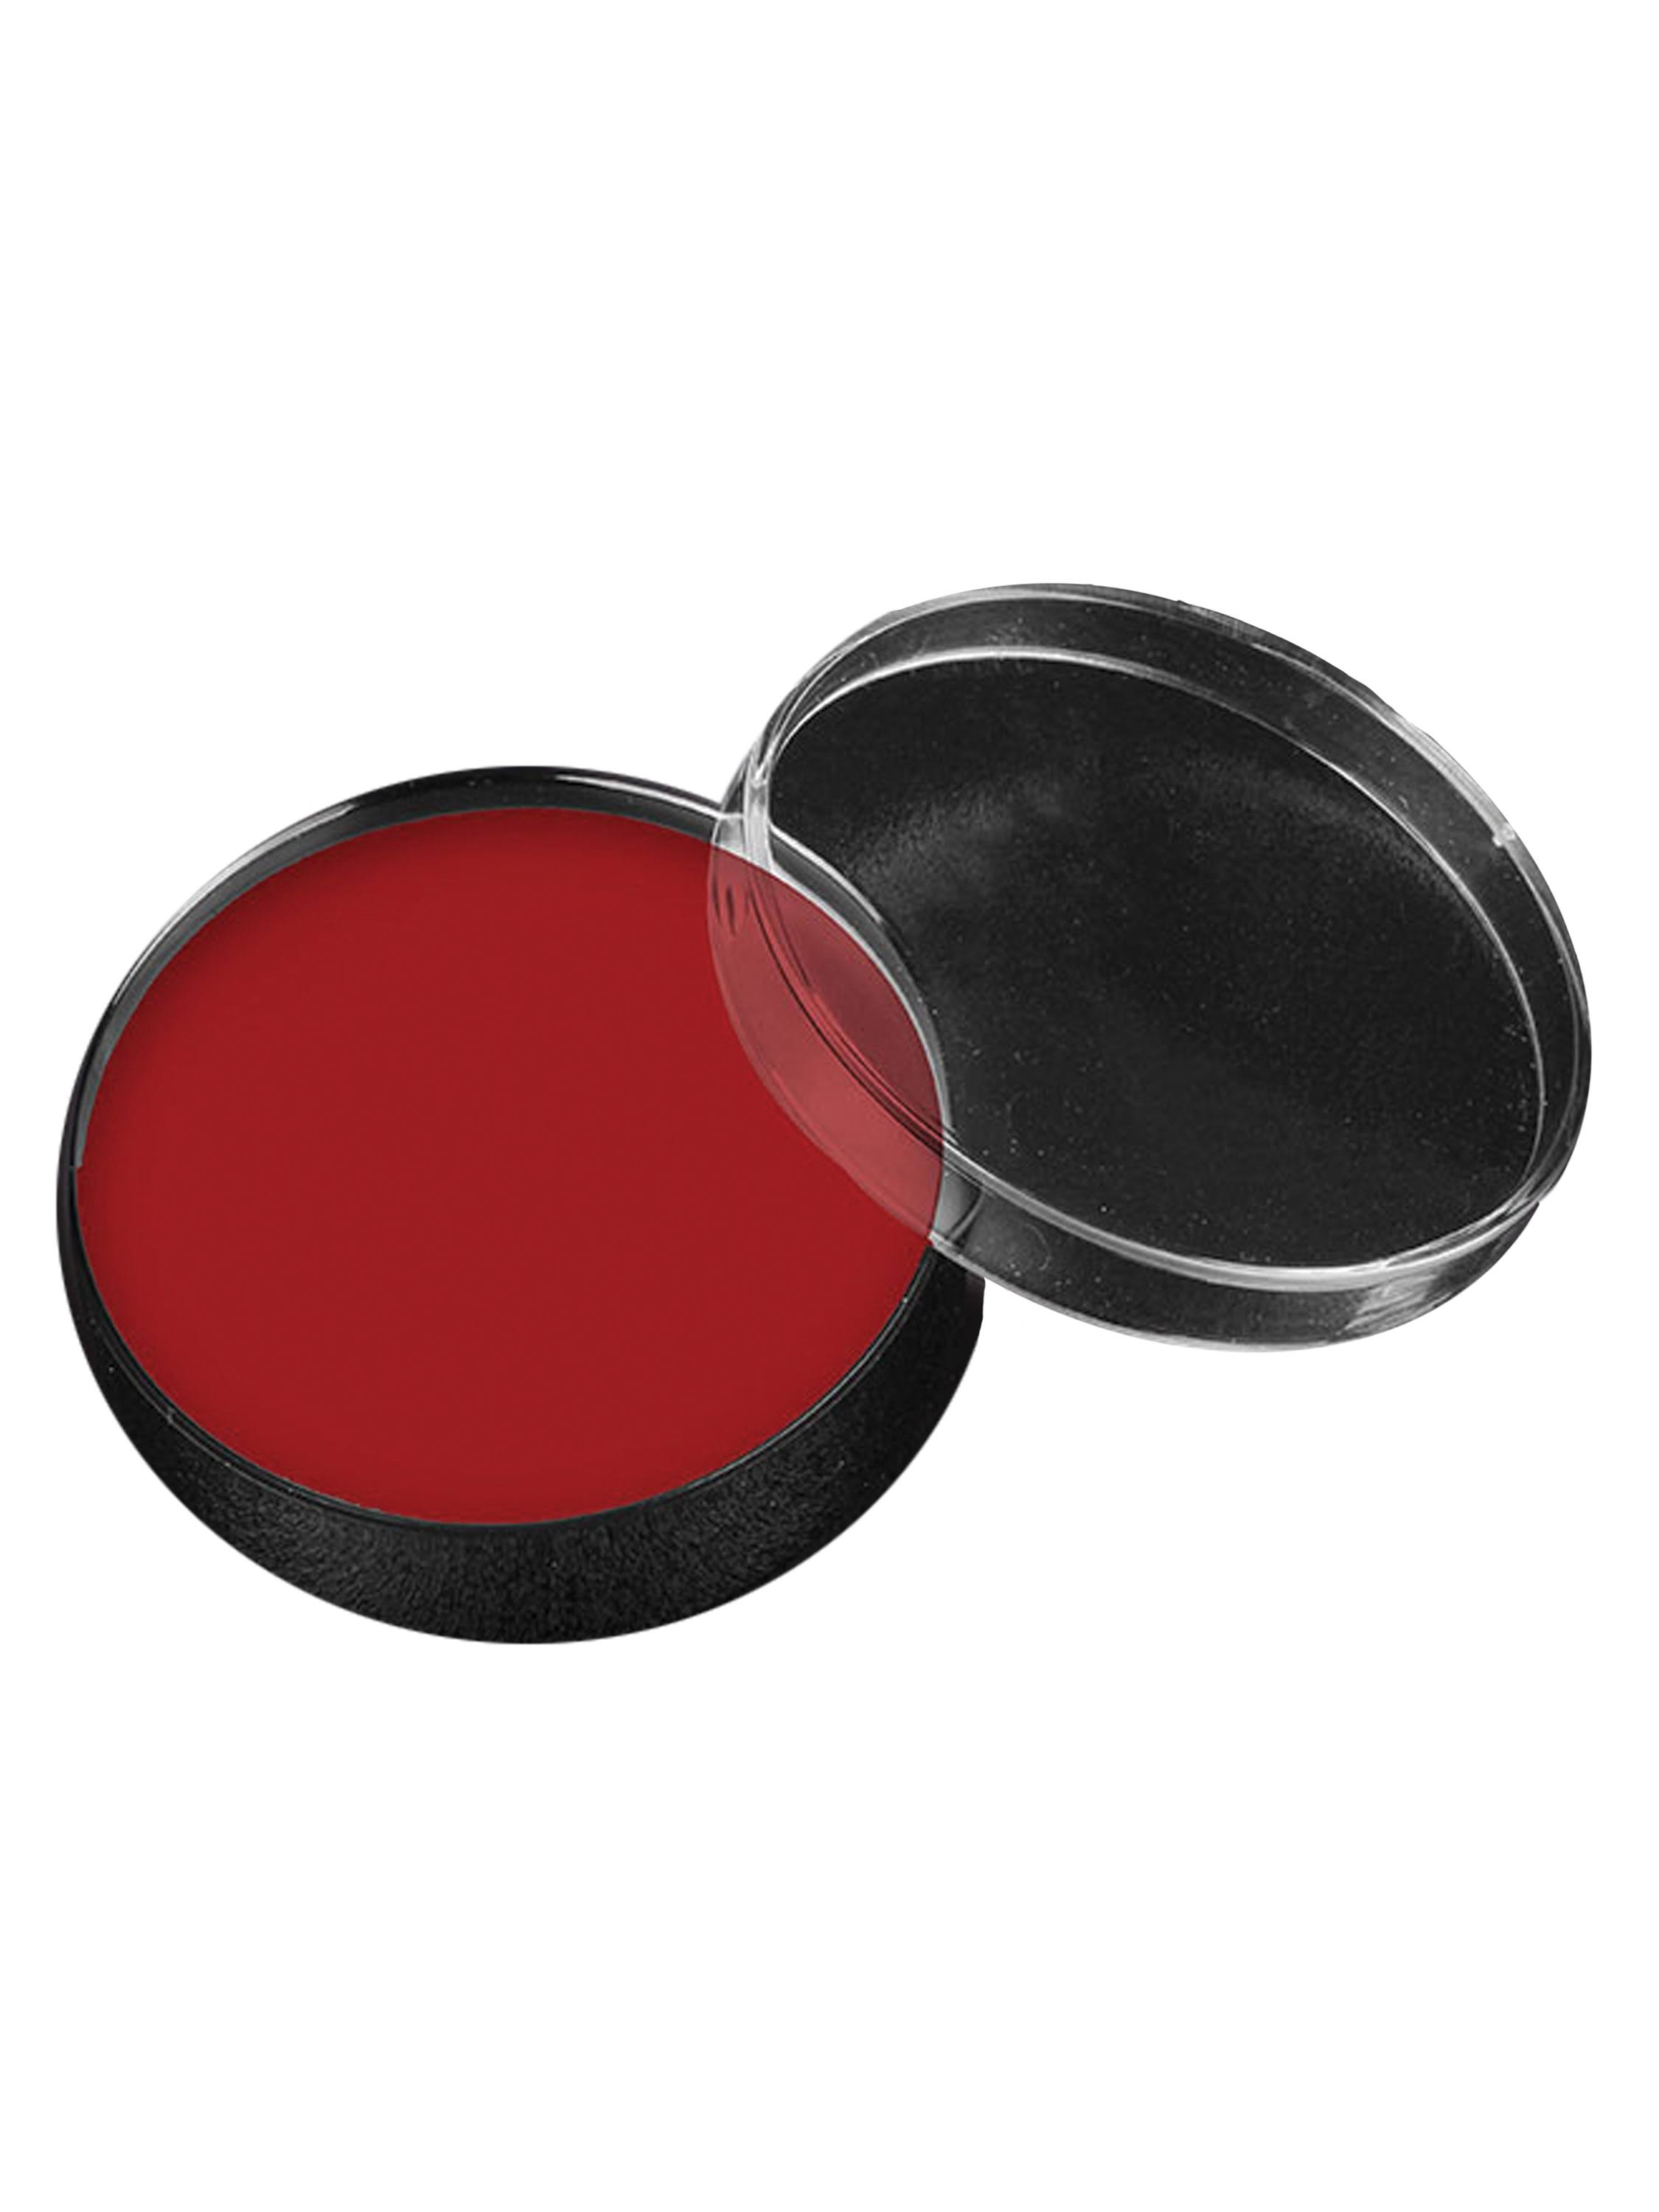 Mehron Color Cup Makeup - Red